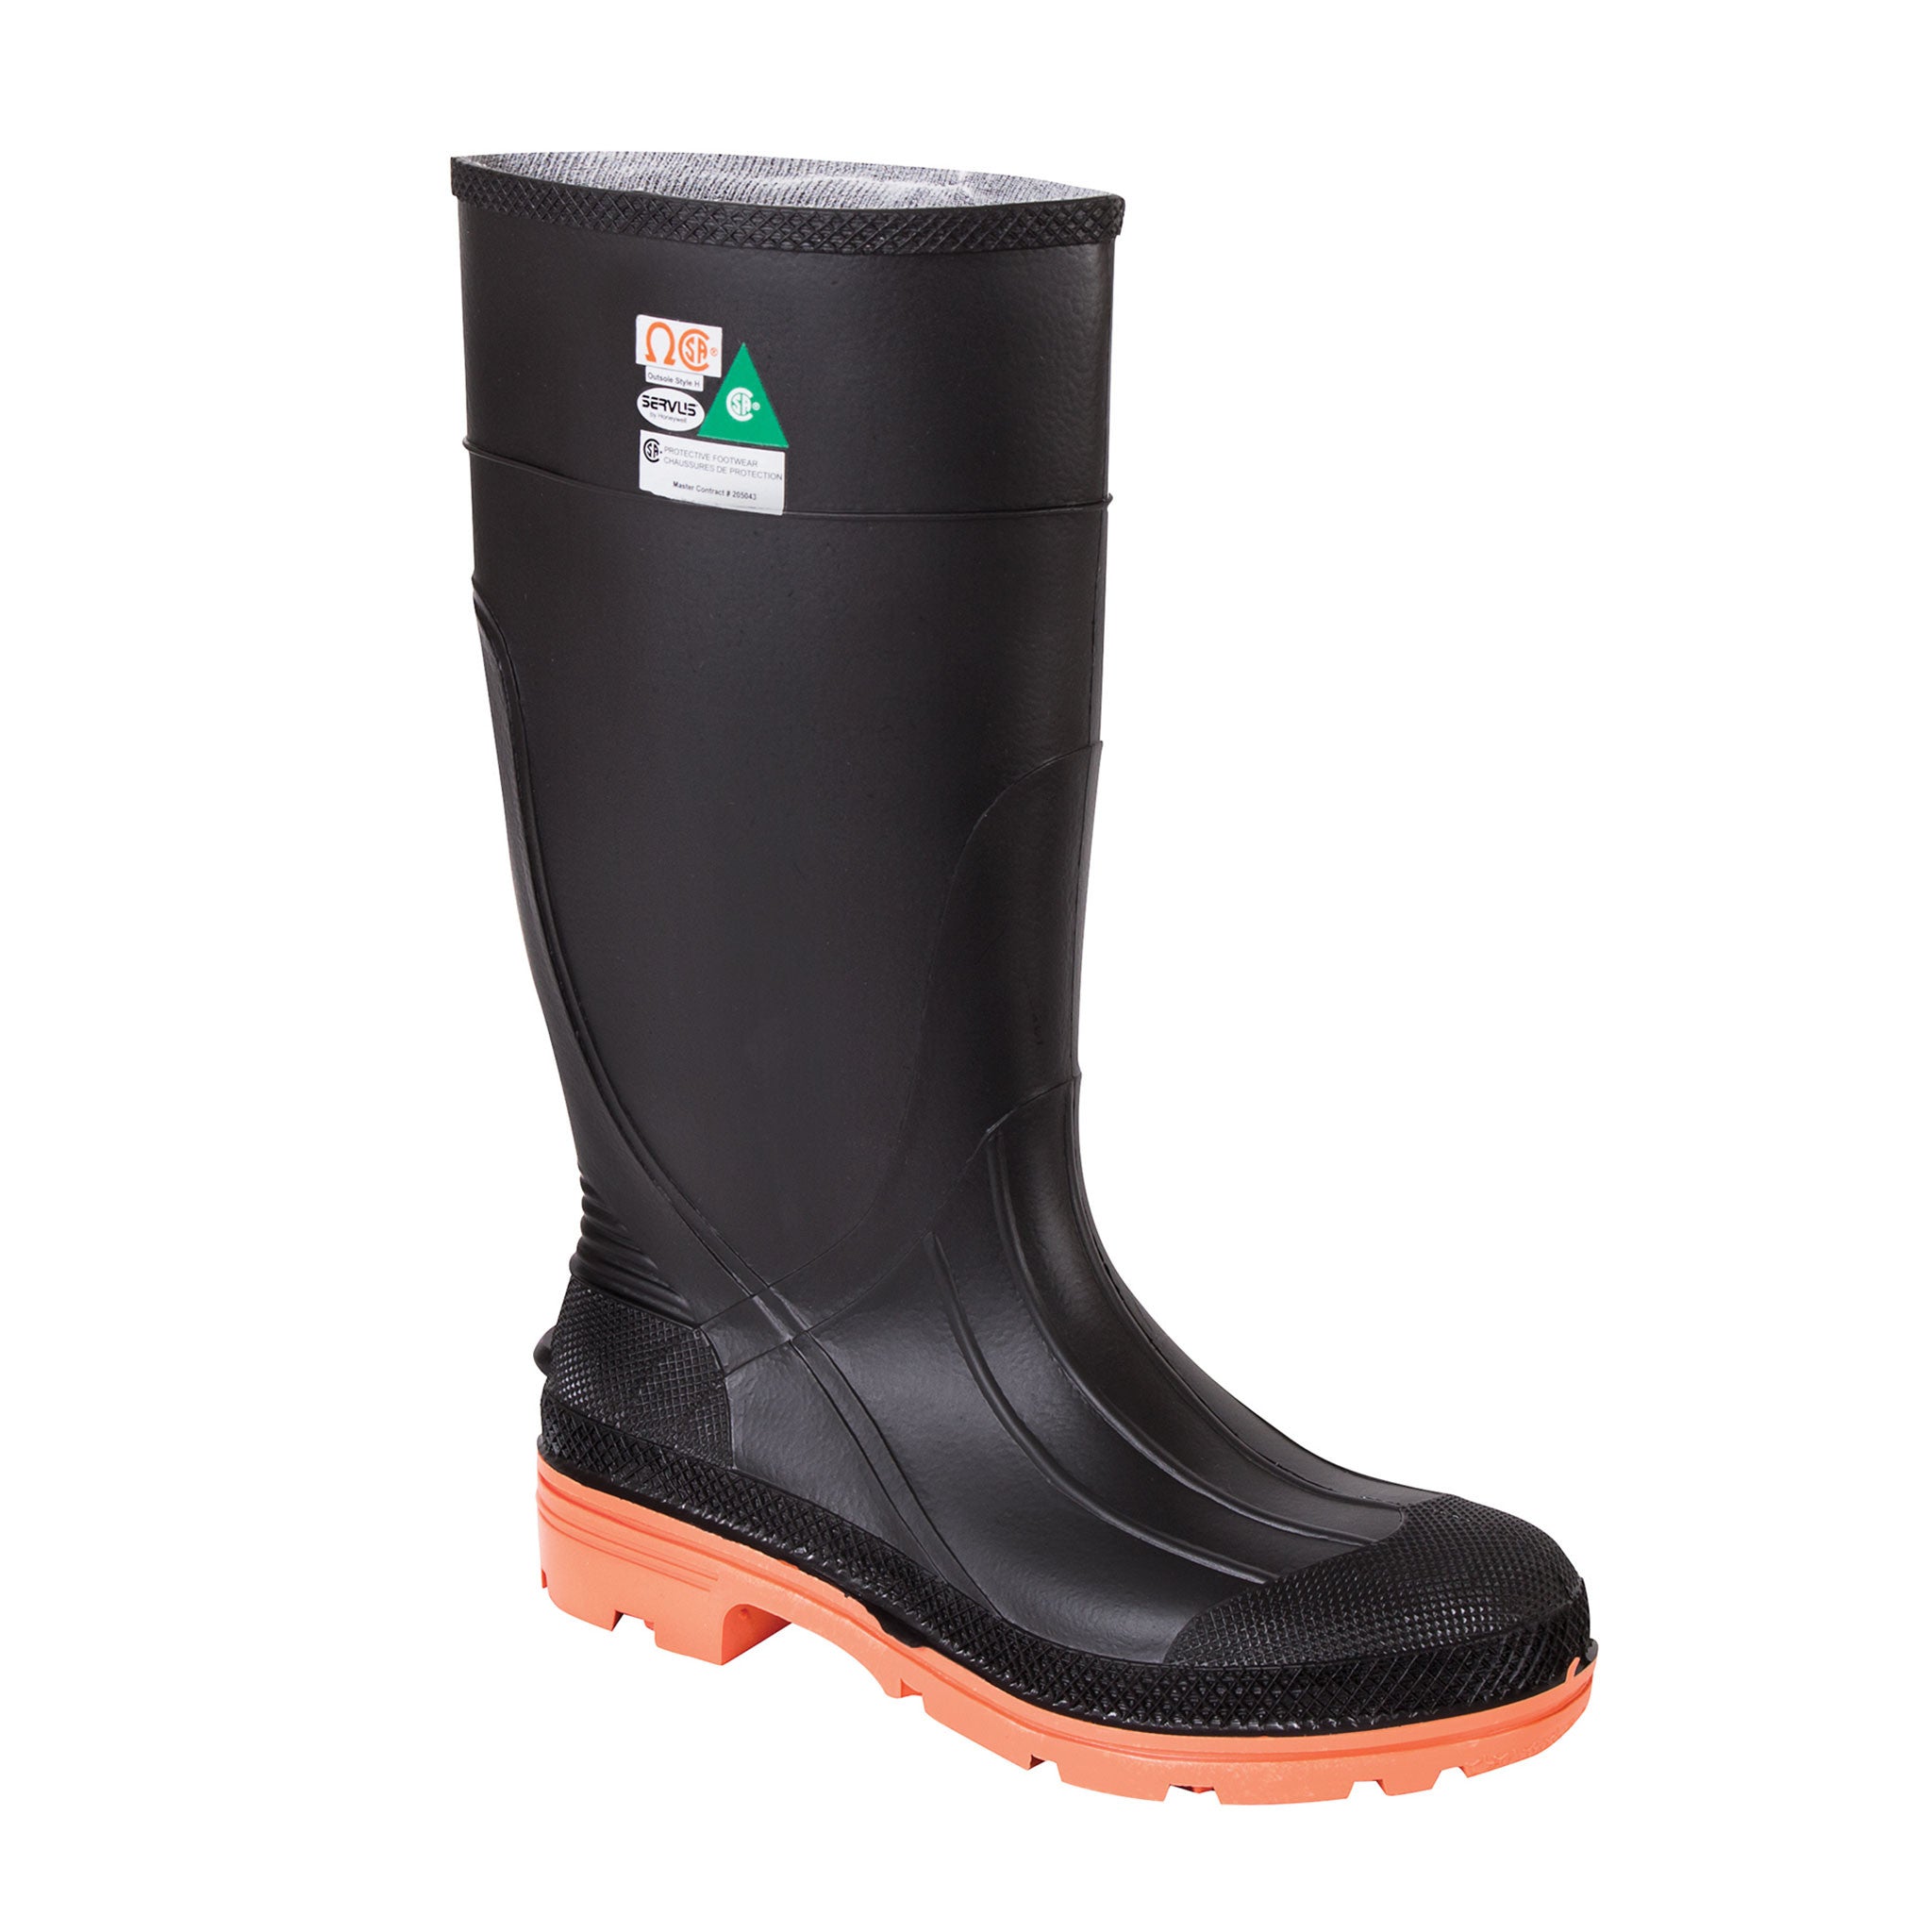 WTW Unisex Rain Boots for Men and Women, Waterproof Rubber Fishing Deck  Boots Neoprene Boots Slip on Ankle Garden Shoes 11 Women/9 Men Navy